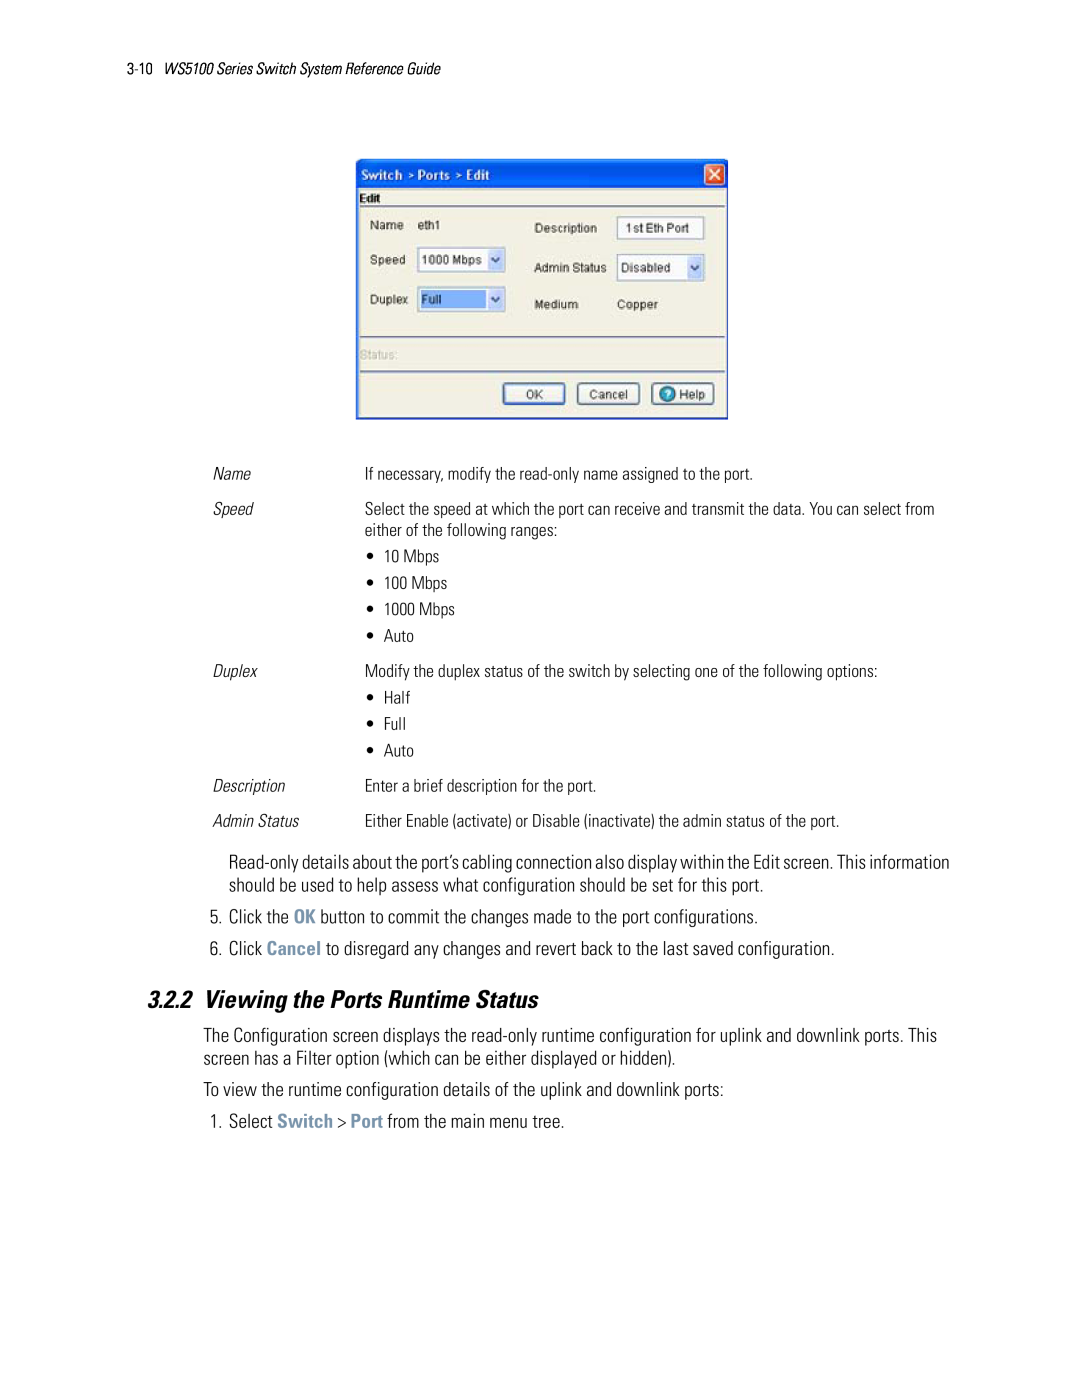 Motorola WS5100 manual 3.2.2Viewing the Ports Runtime Status 